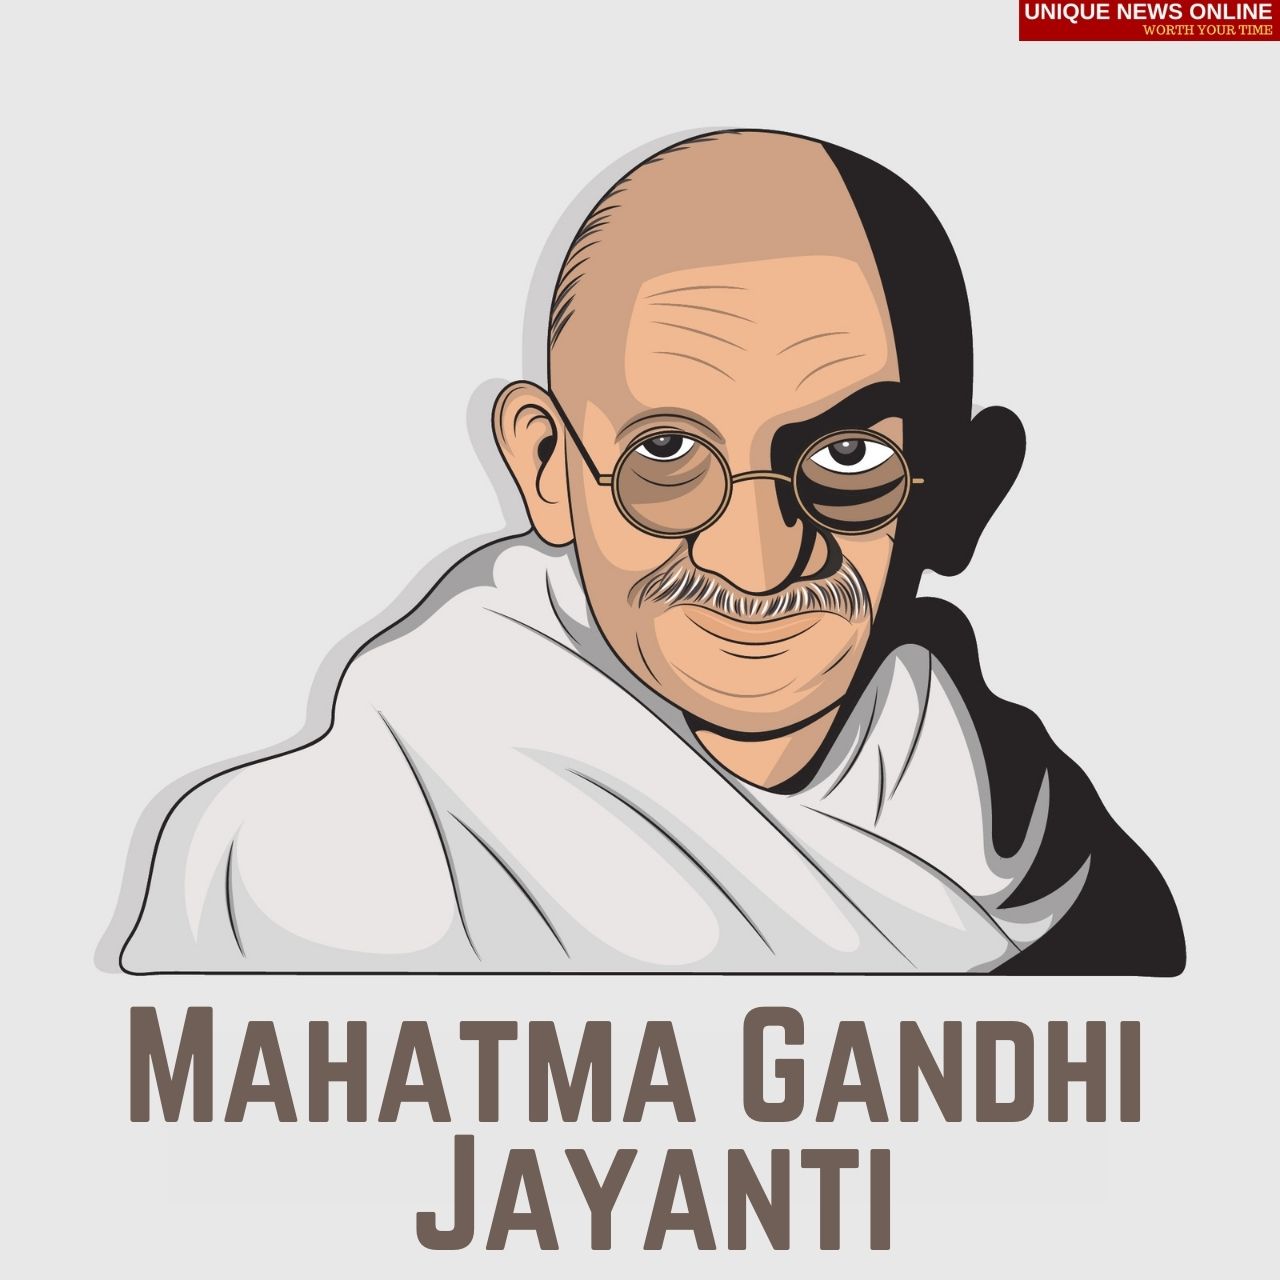 Mahatma Gandhi Jayanti 2021 Poster, Instagram Captions, Status, Wallpaper,  Social Media Posts, Banner, and Drawing to Share